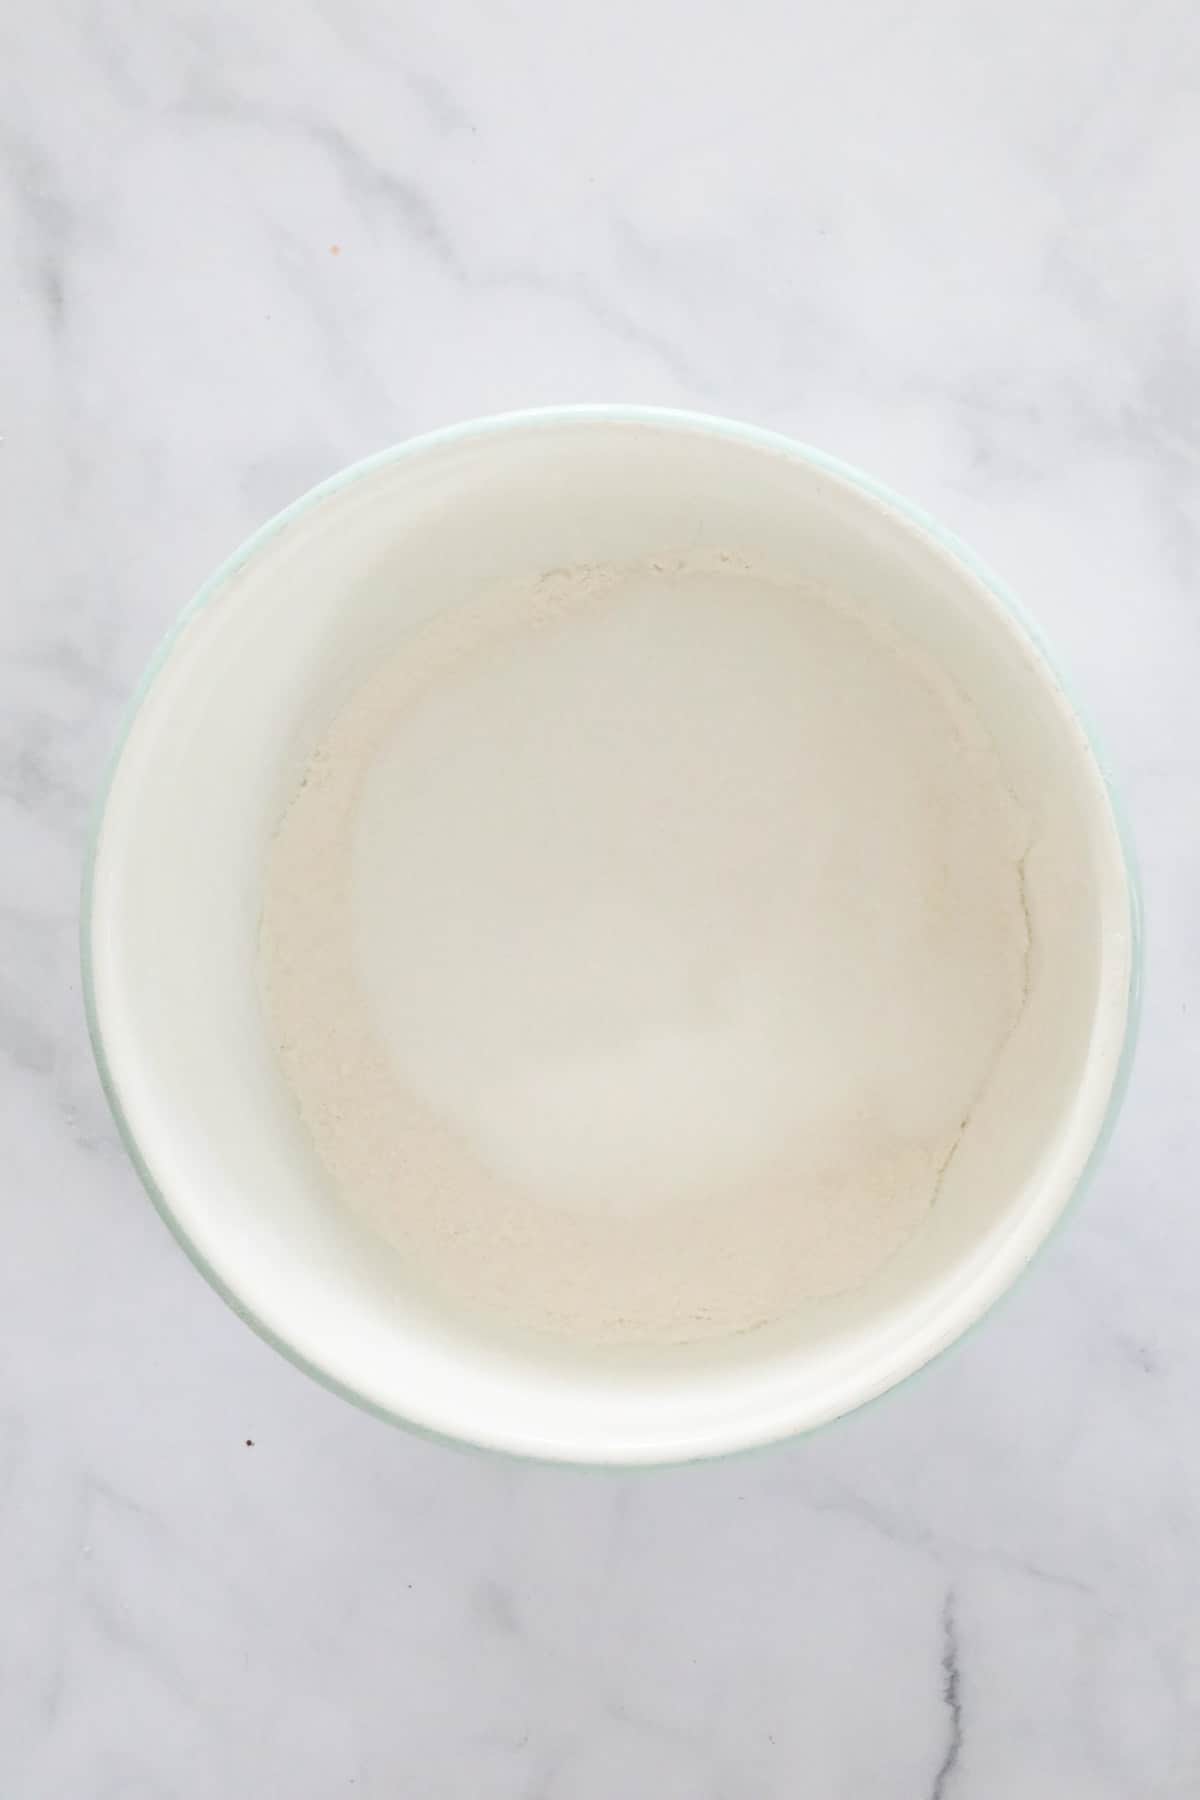 Flour in a white mixing bowl